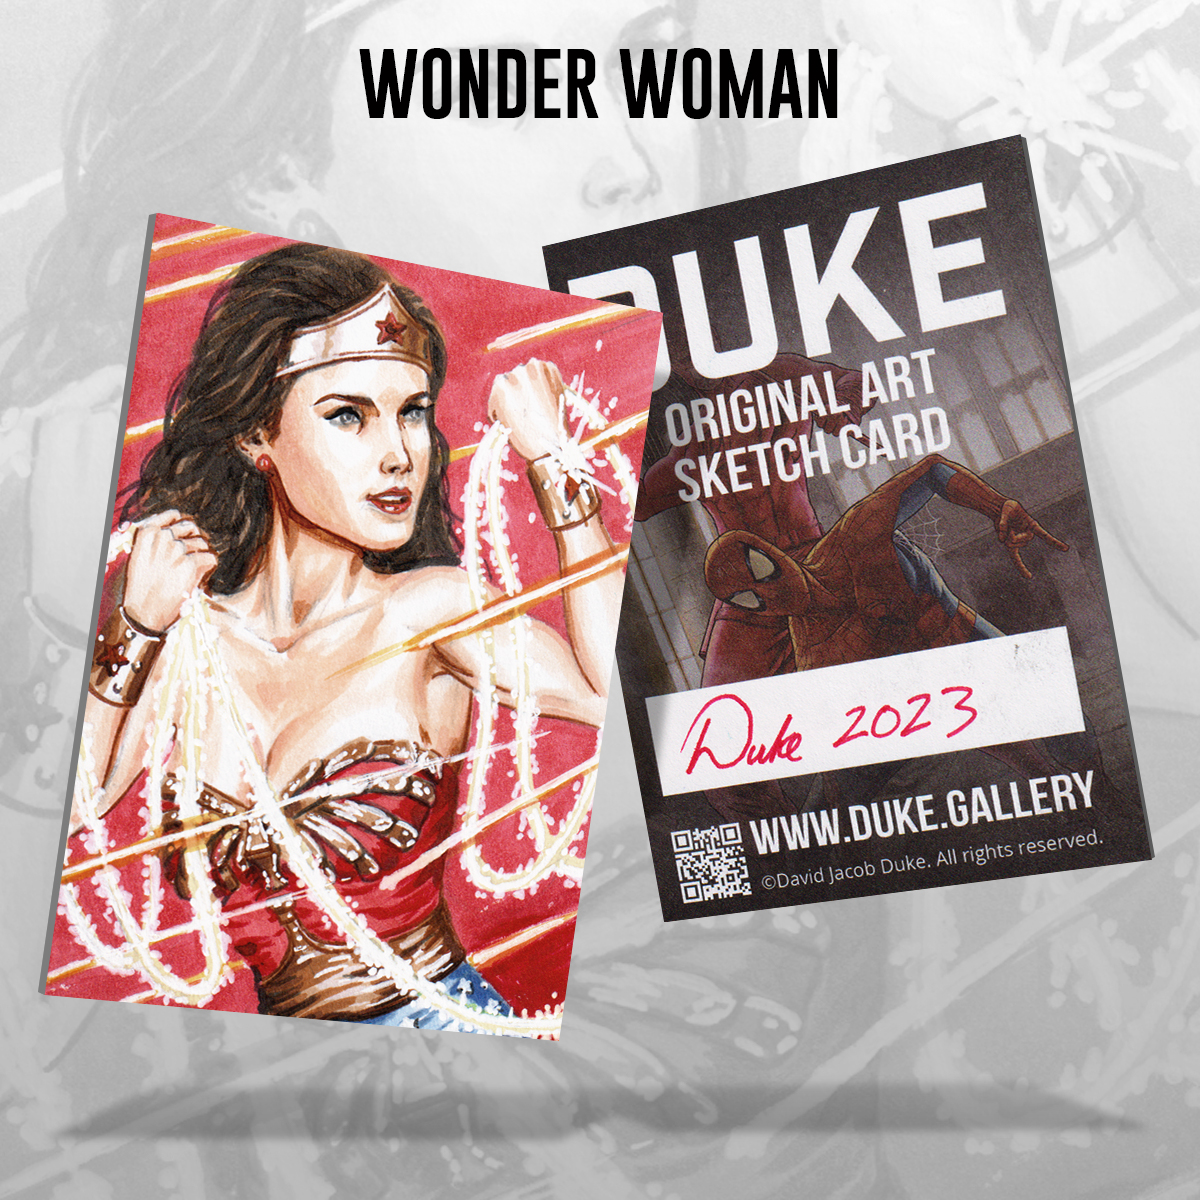 Wonder Woman Sketch Card by Duke